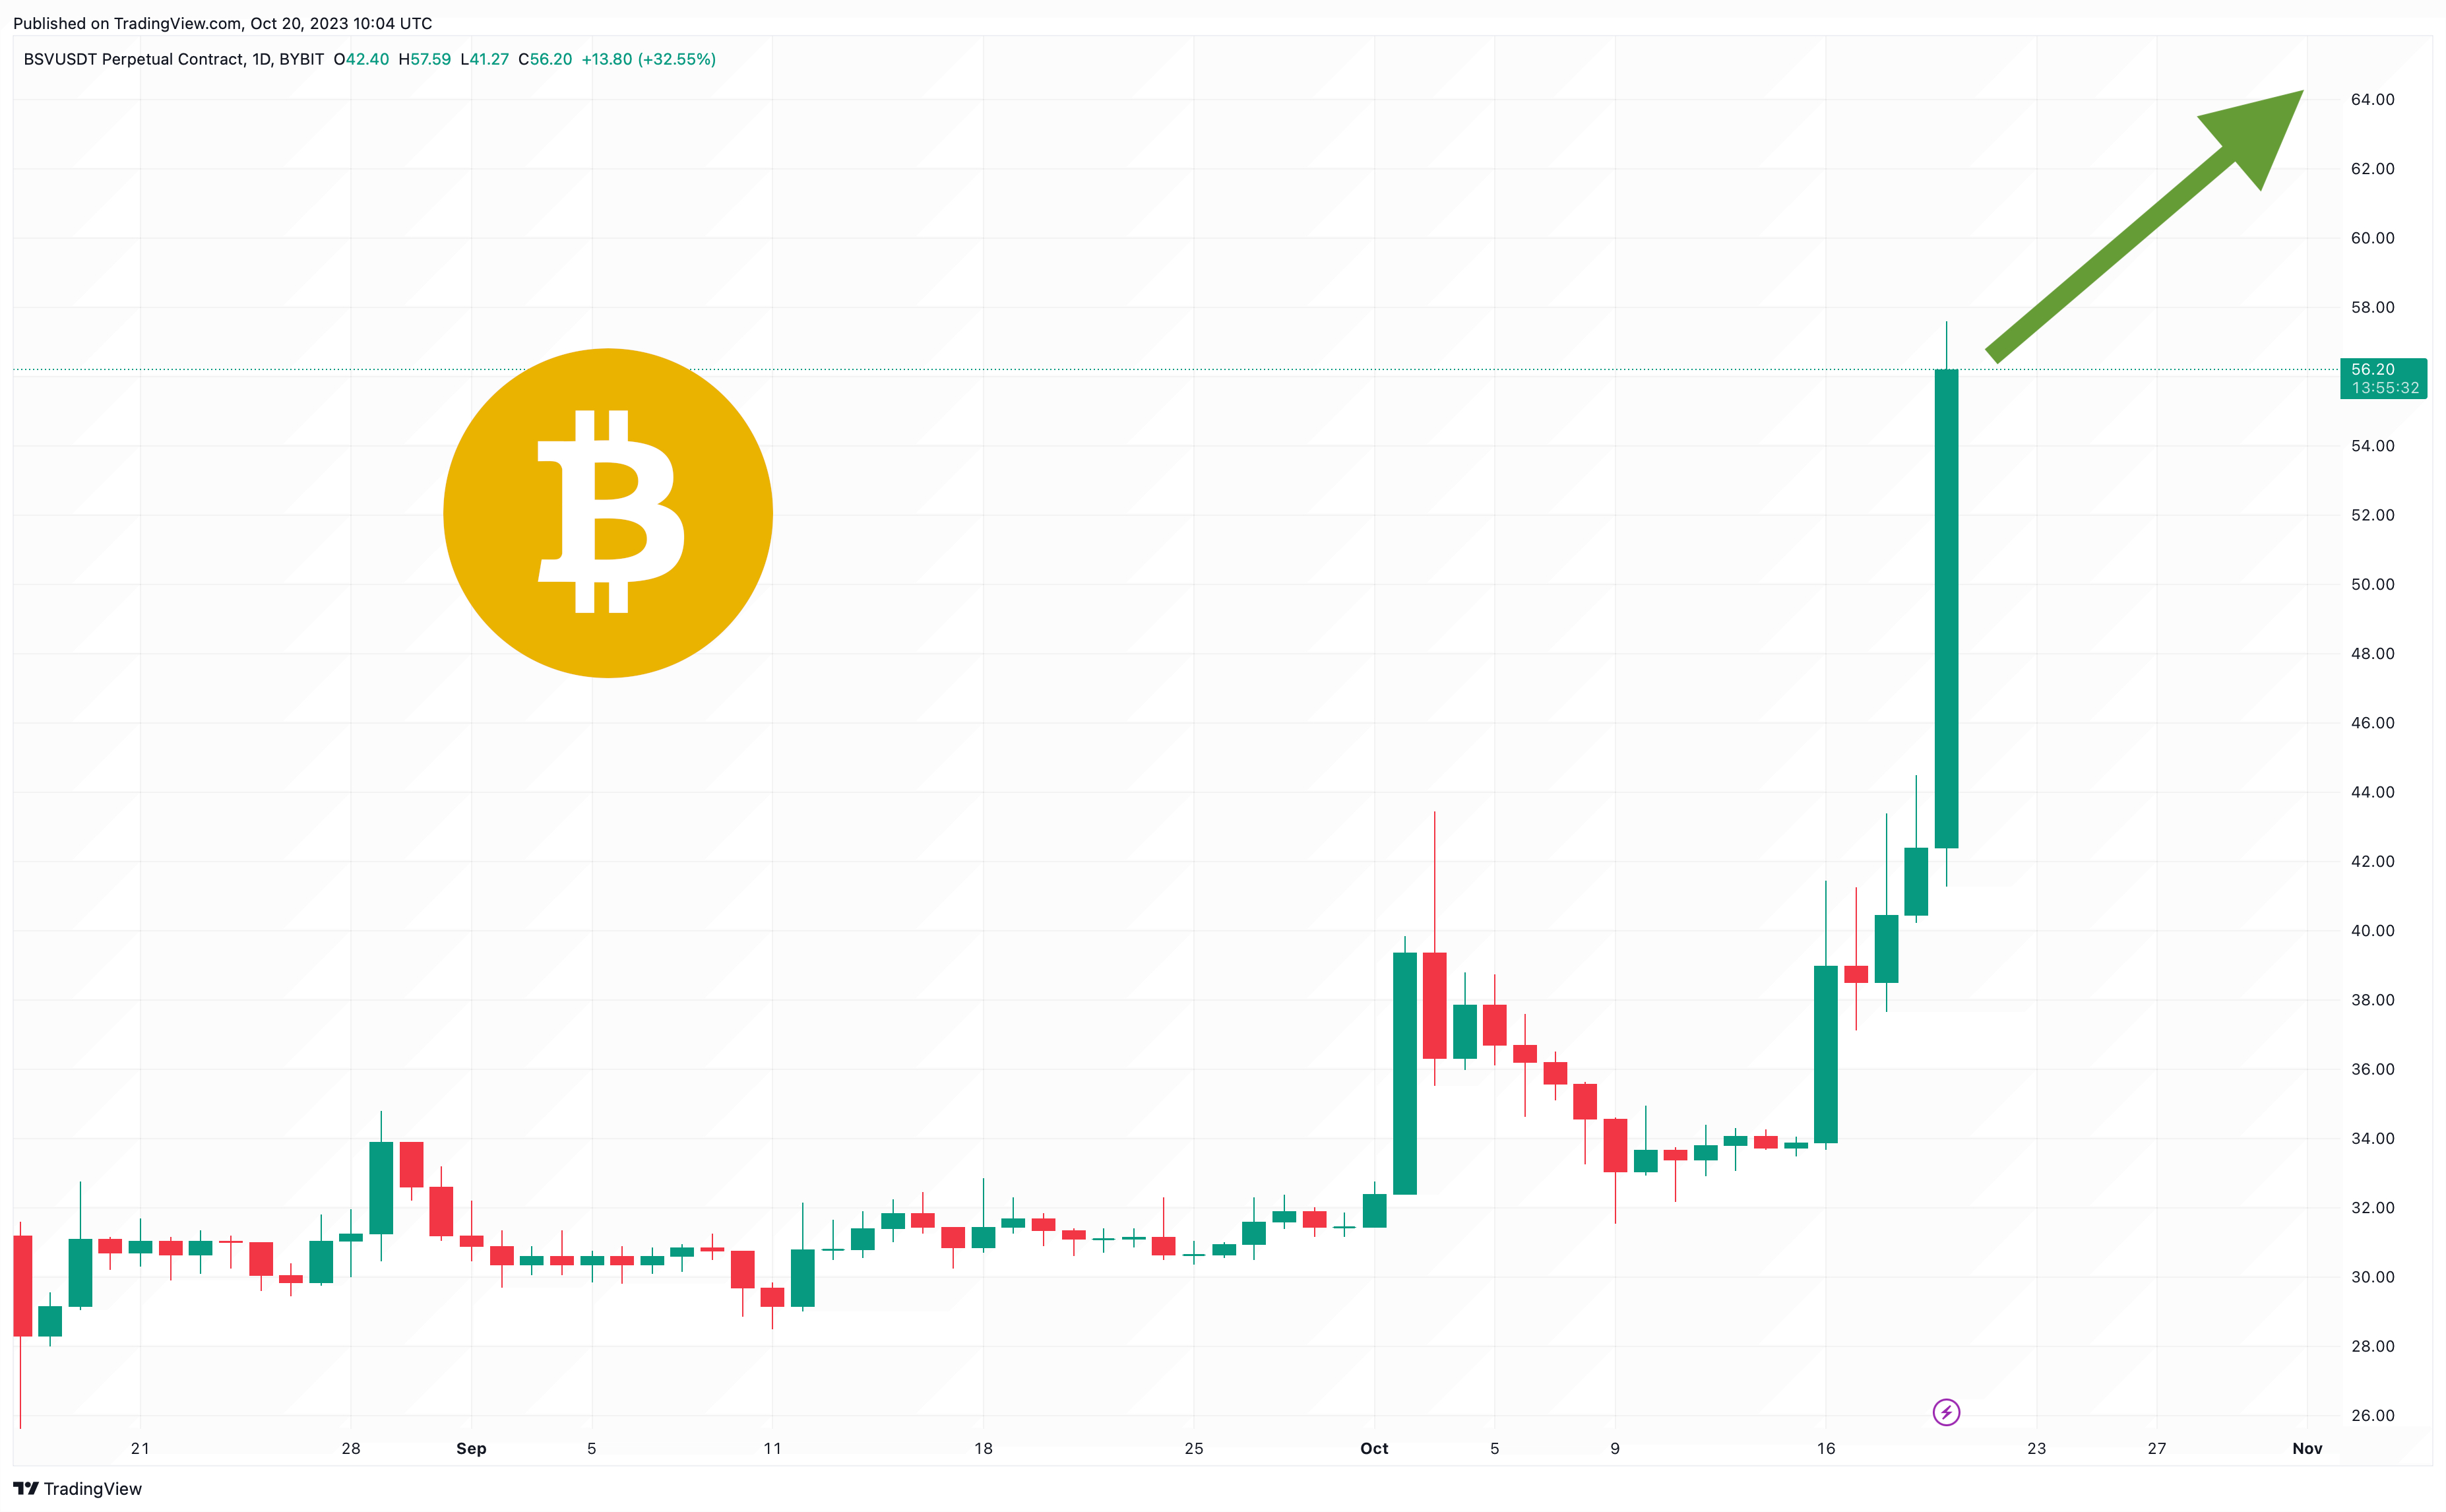 Bitcoin SV price today, BSV to USD live price, marketcap and chart | CoinMarketCap